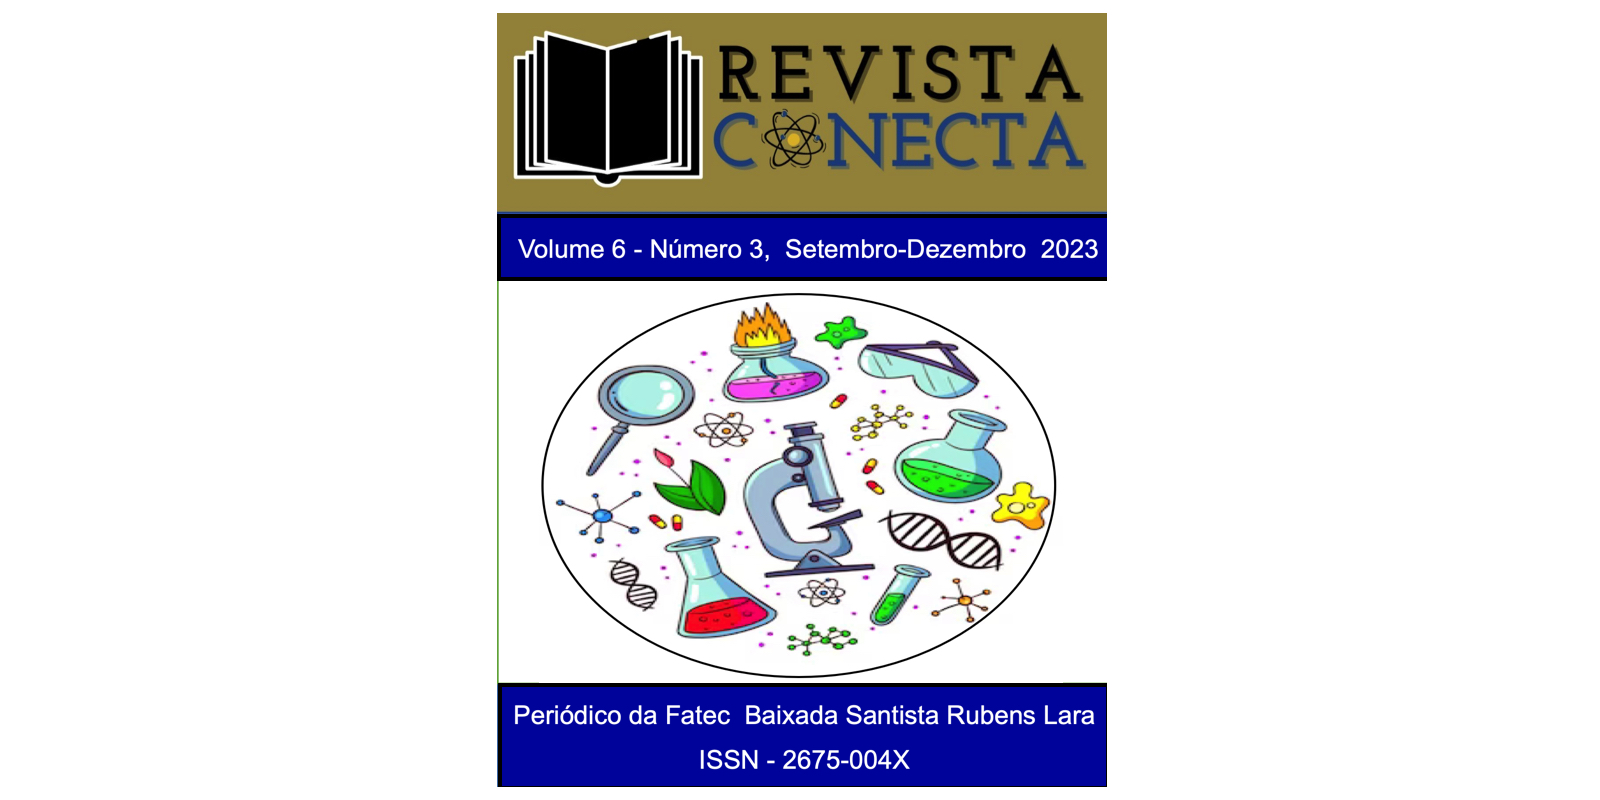 					View Vol. 6 No. 3 (2023): REVISTA CONECTA
				